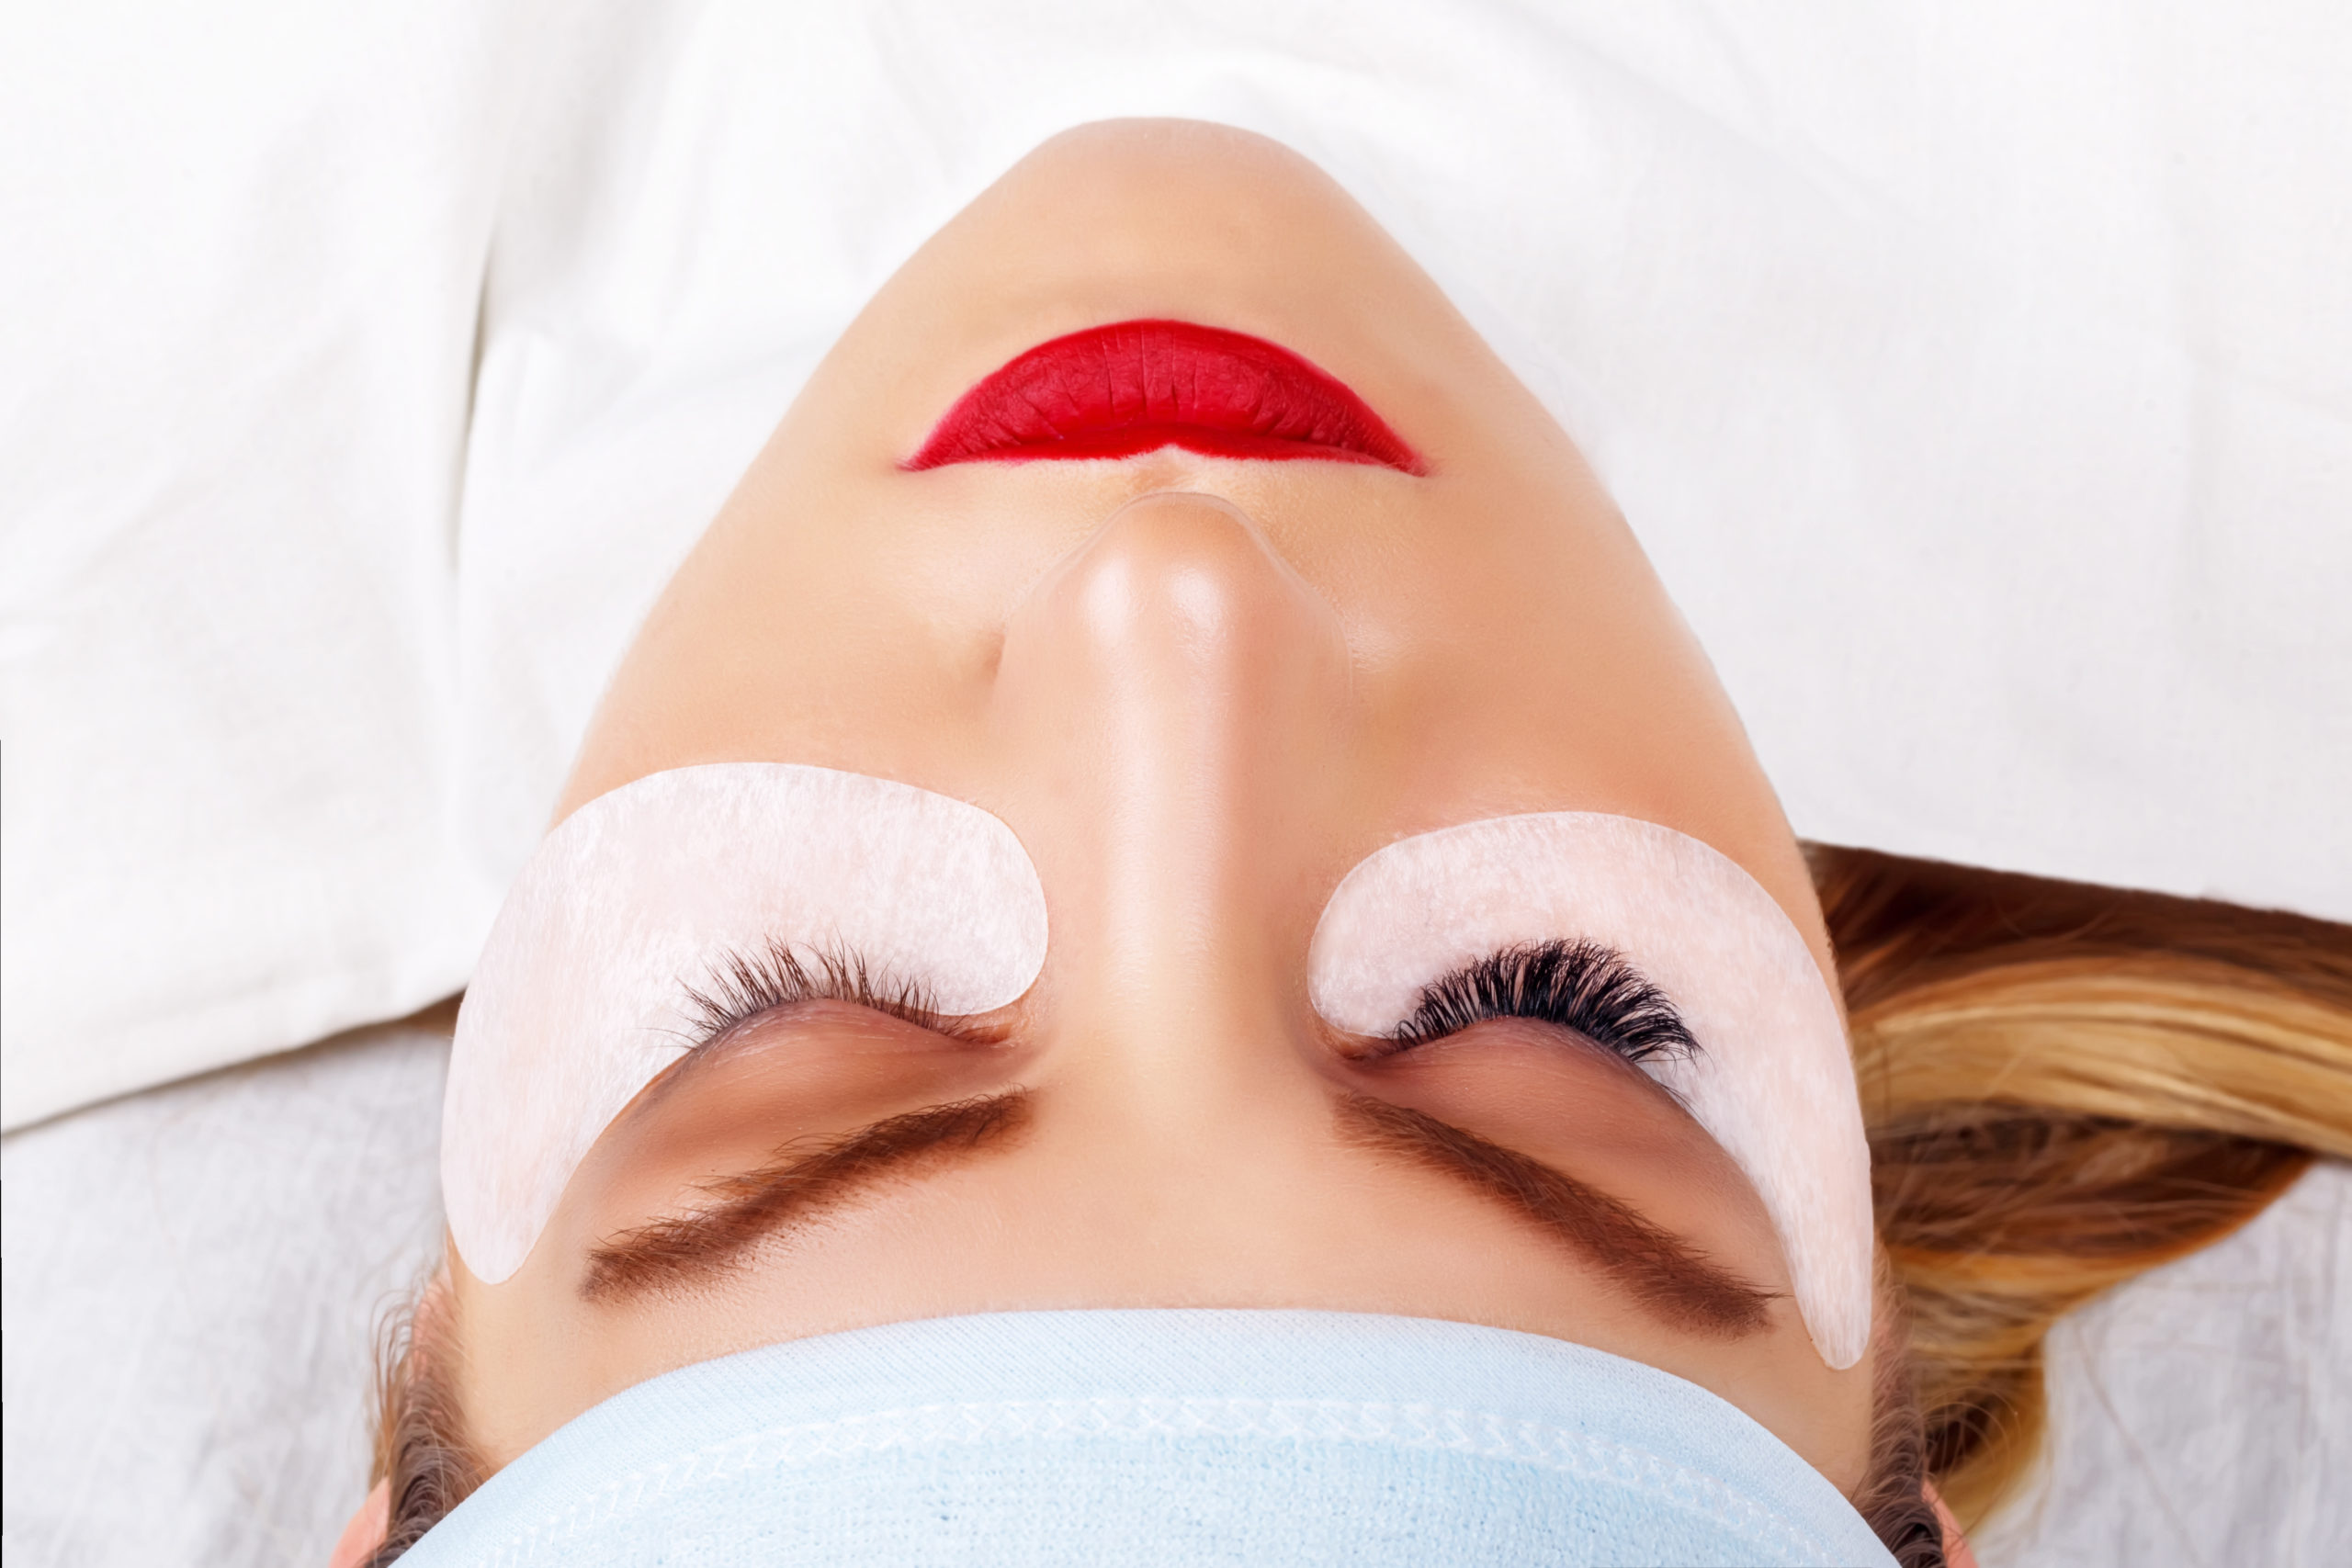 Eyelash Extension Procedure. Woman Eye with Long Eyelashes. Lashes. Close up, selected focus.